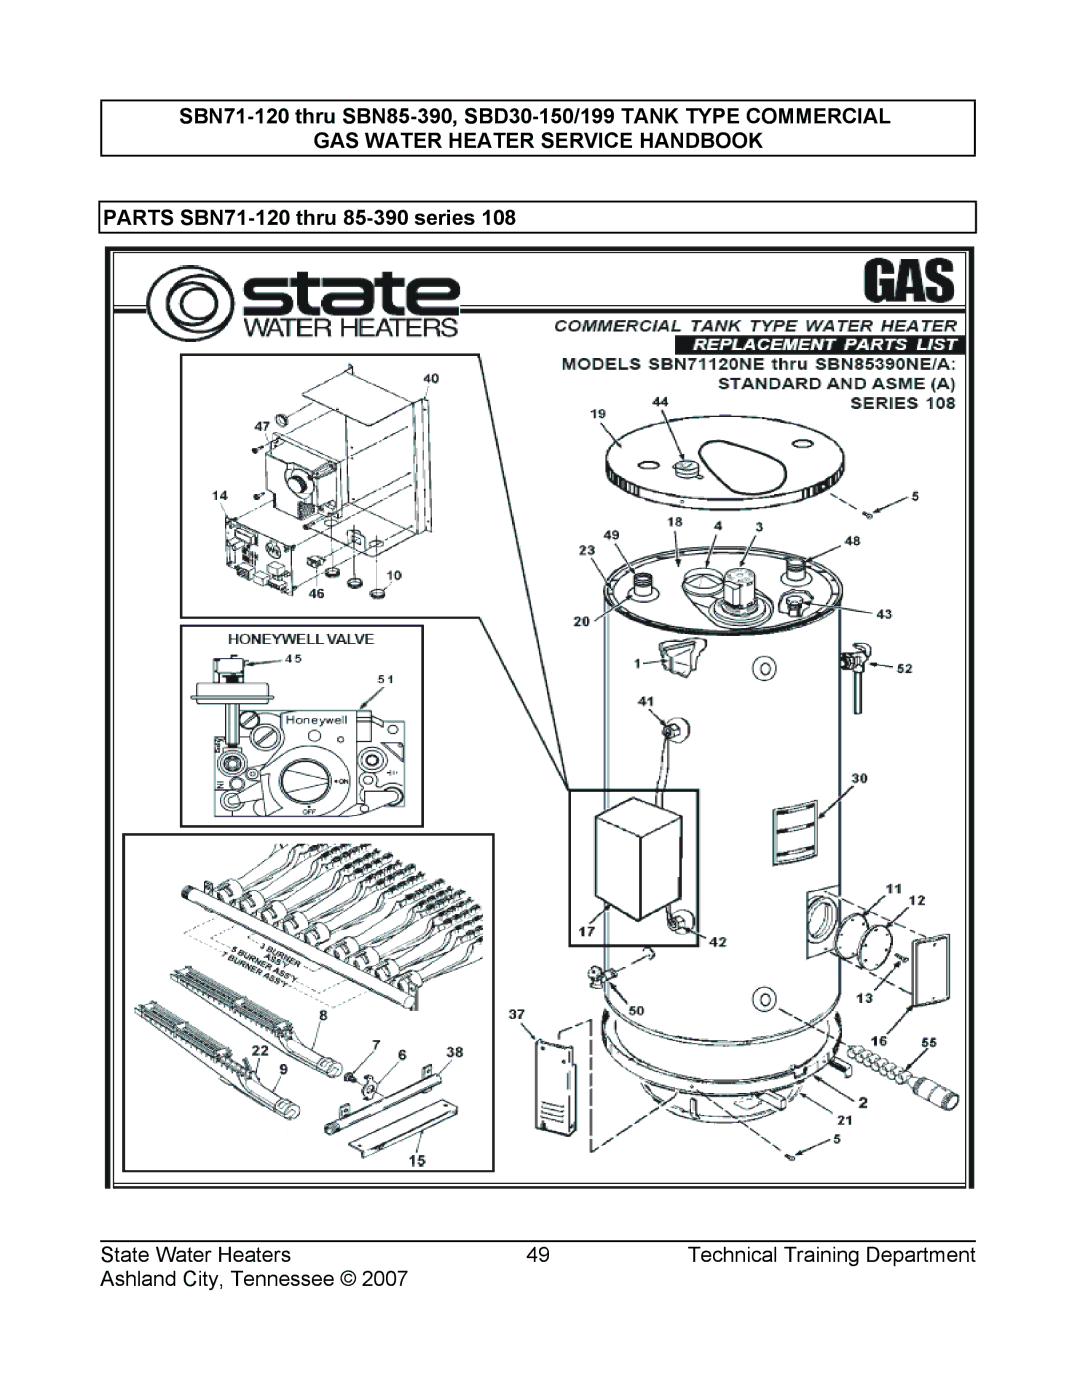 State Industries SBD30 150, SBN85 390 (A), SBN71 120, SBD30 199, SERIES 108 manual GAS Water Heater Service Handbook 